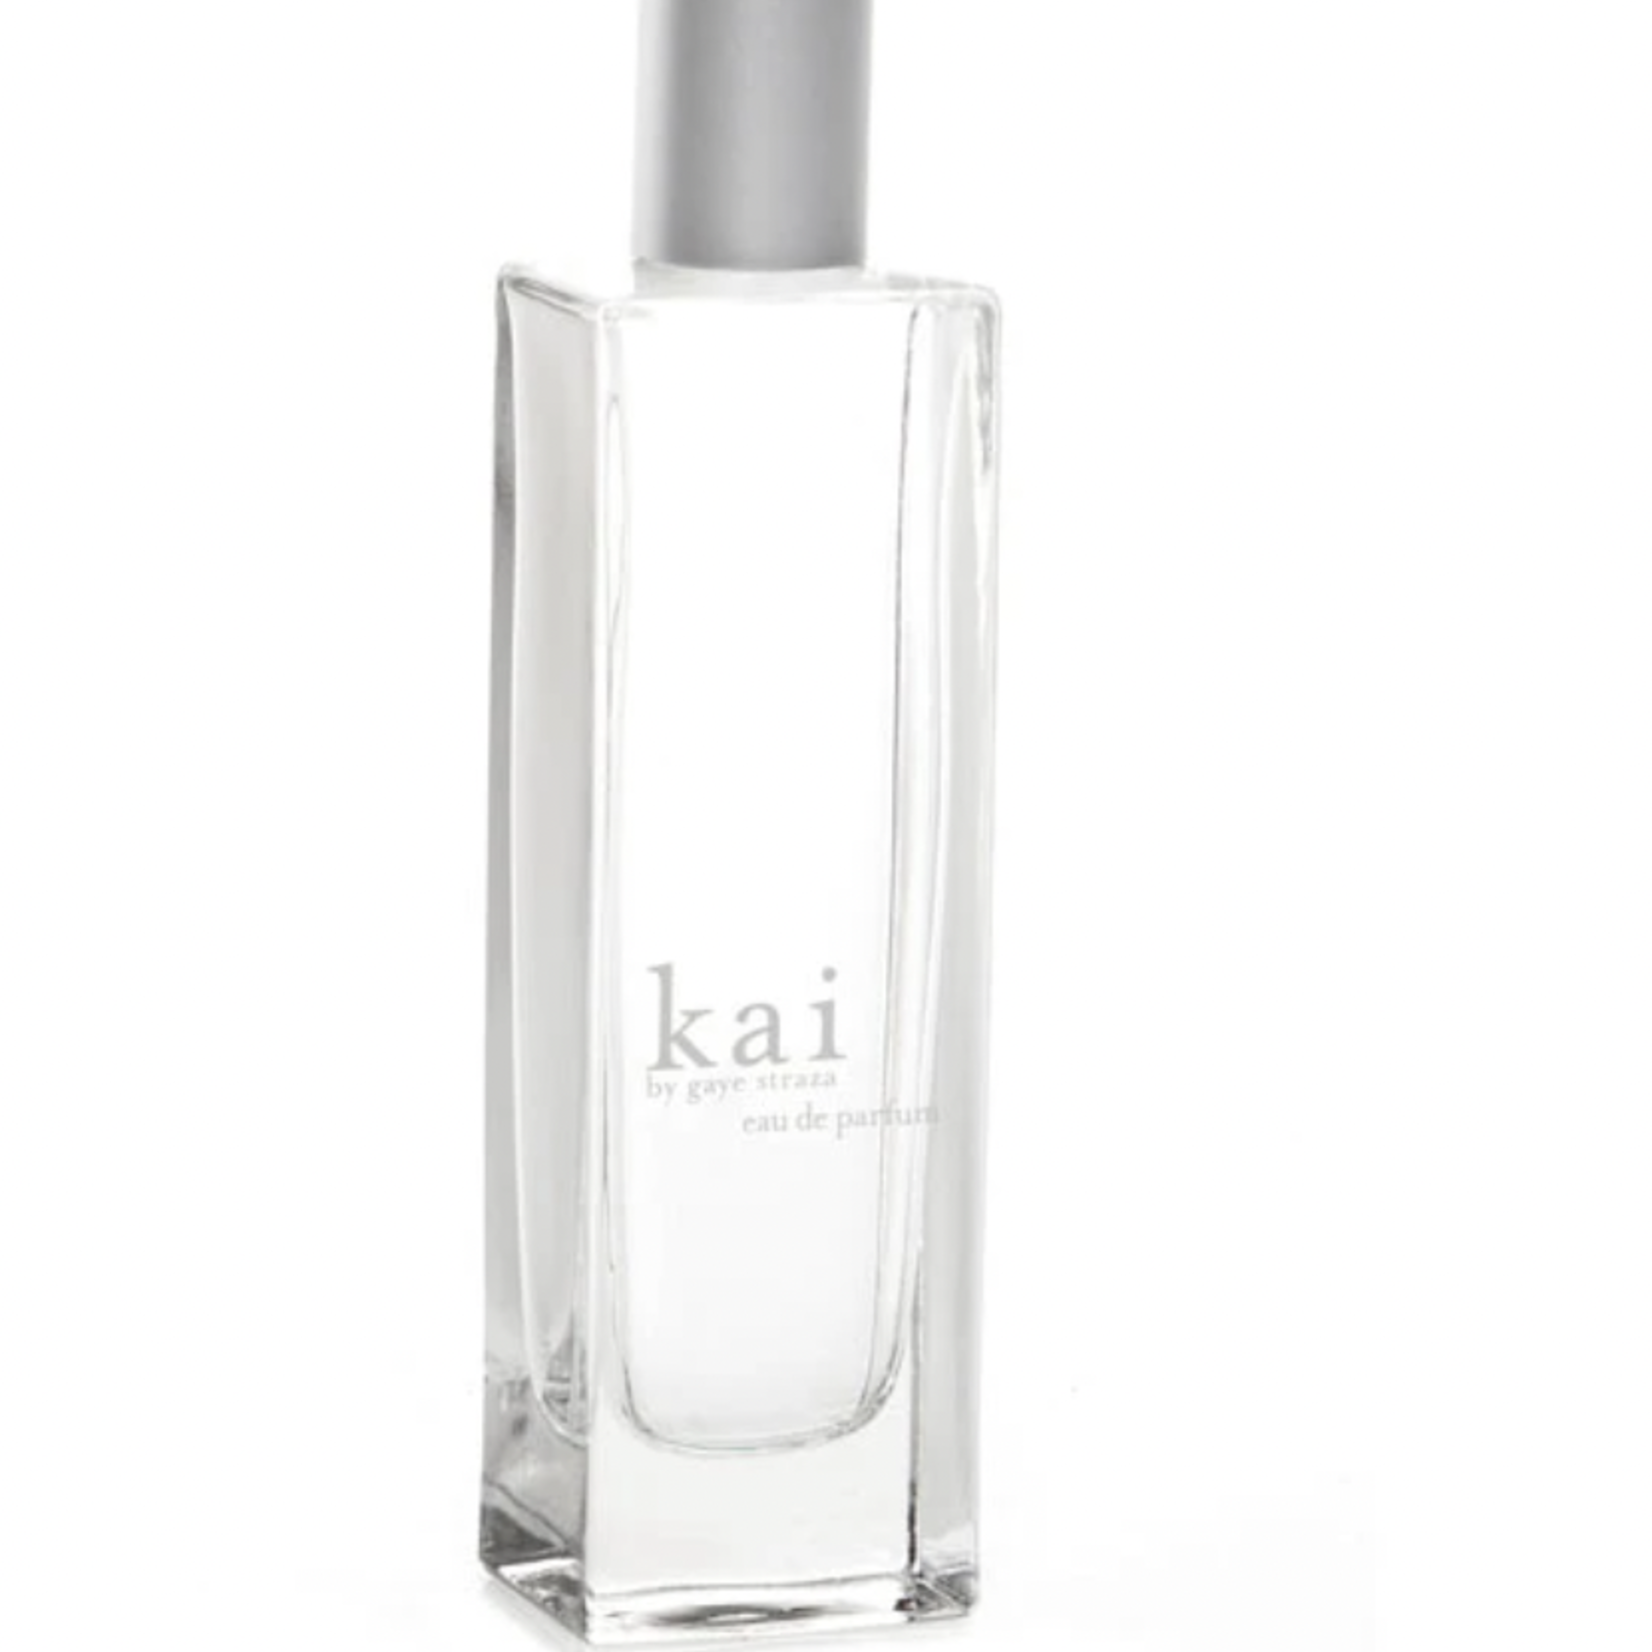 Kai Perfume Eau De Parfum 1.7oz. Spray Bottle